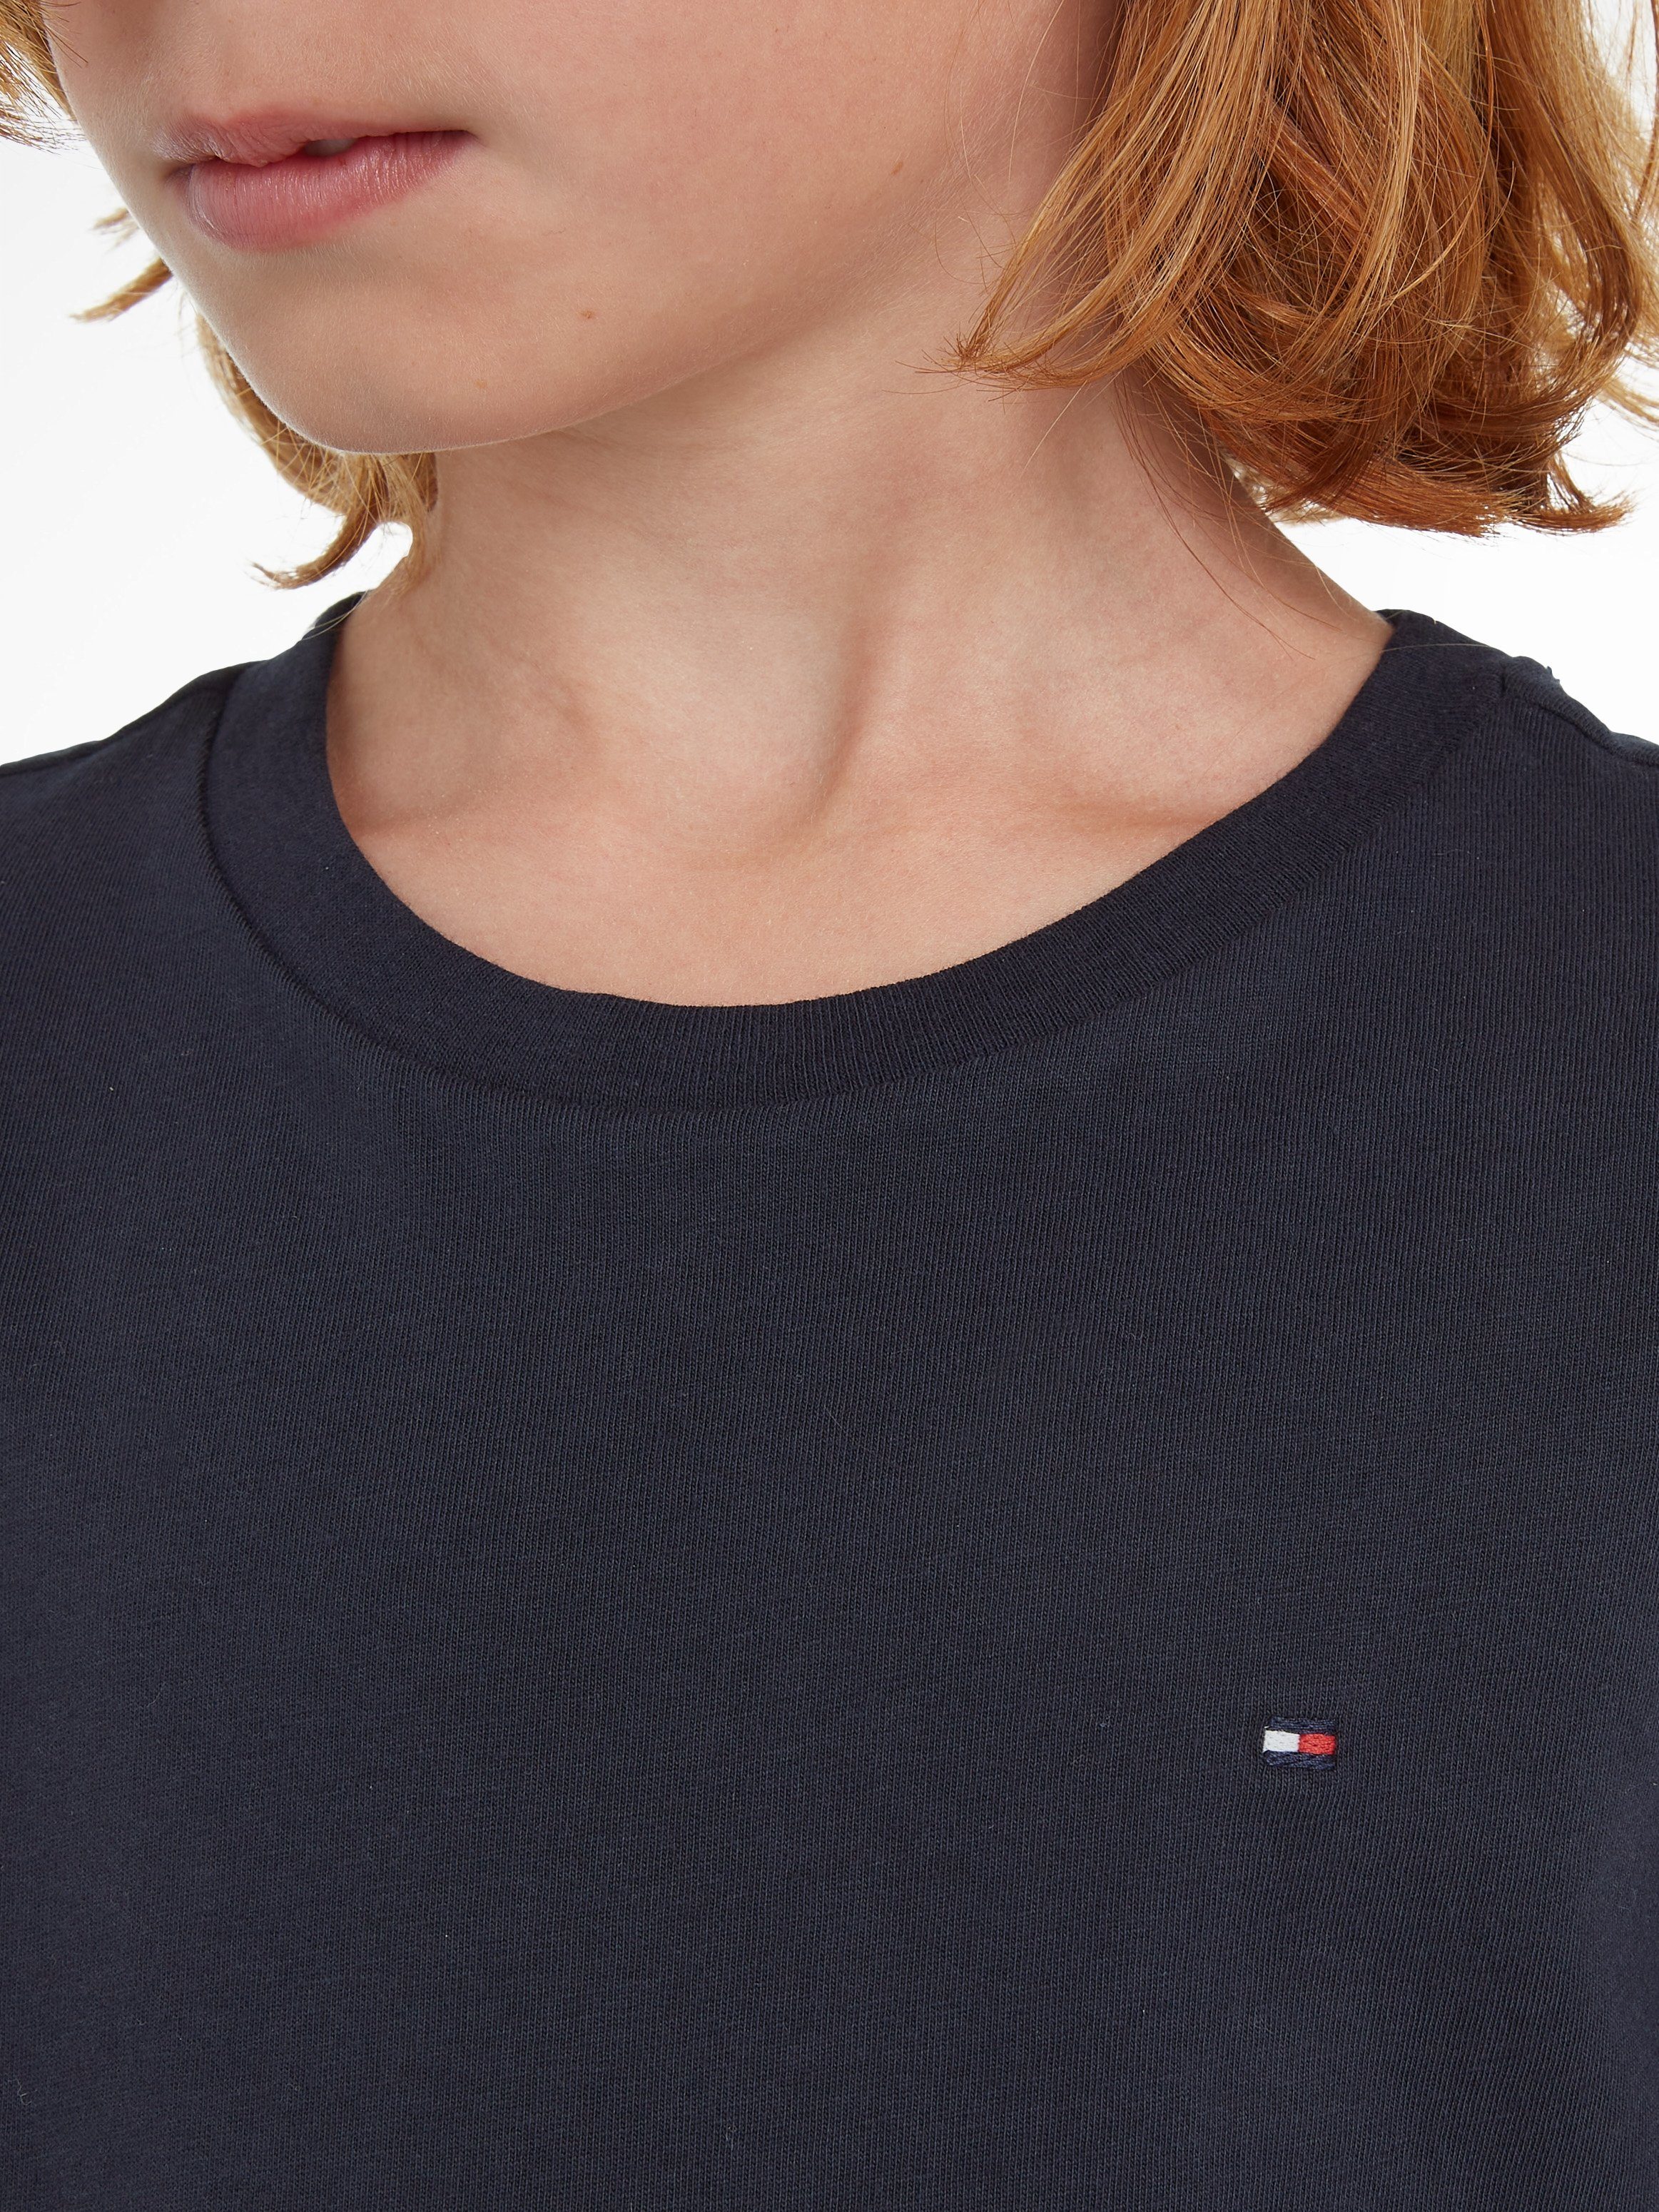 MiniMe,für Kids Tommy T-Shirt KNIT Kinder BOYS BASIC Junior CN Jungen Hilfiger